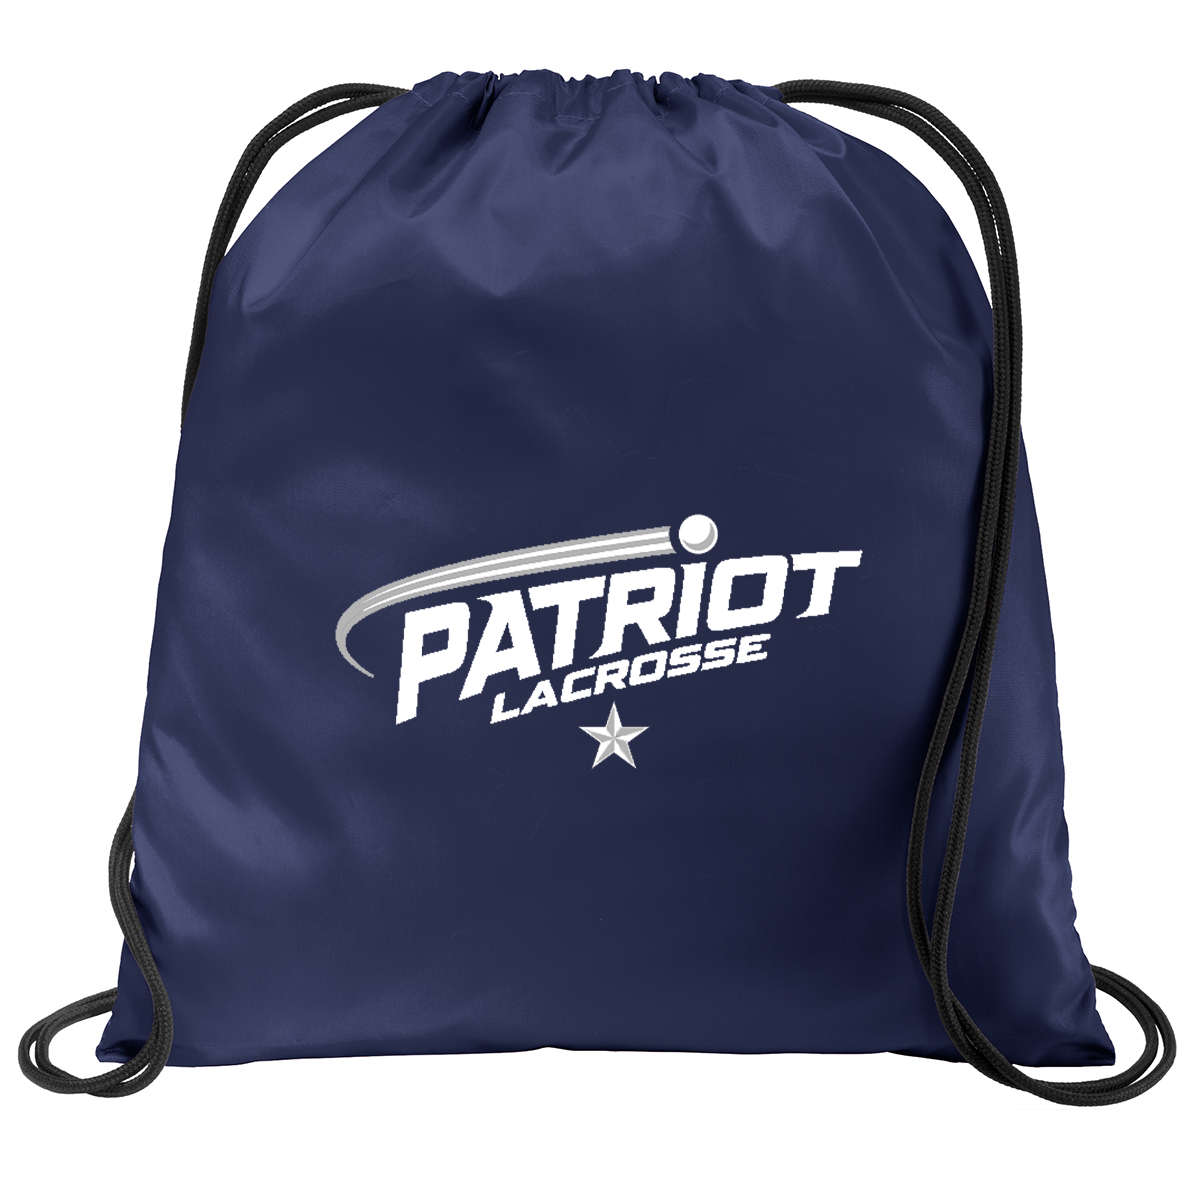 Patriot Lacrosse Cinch Pack